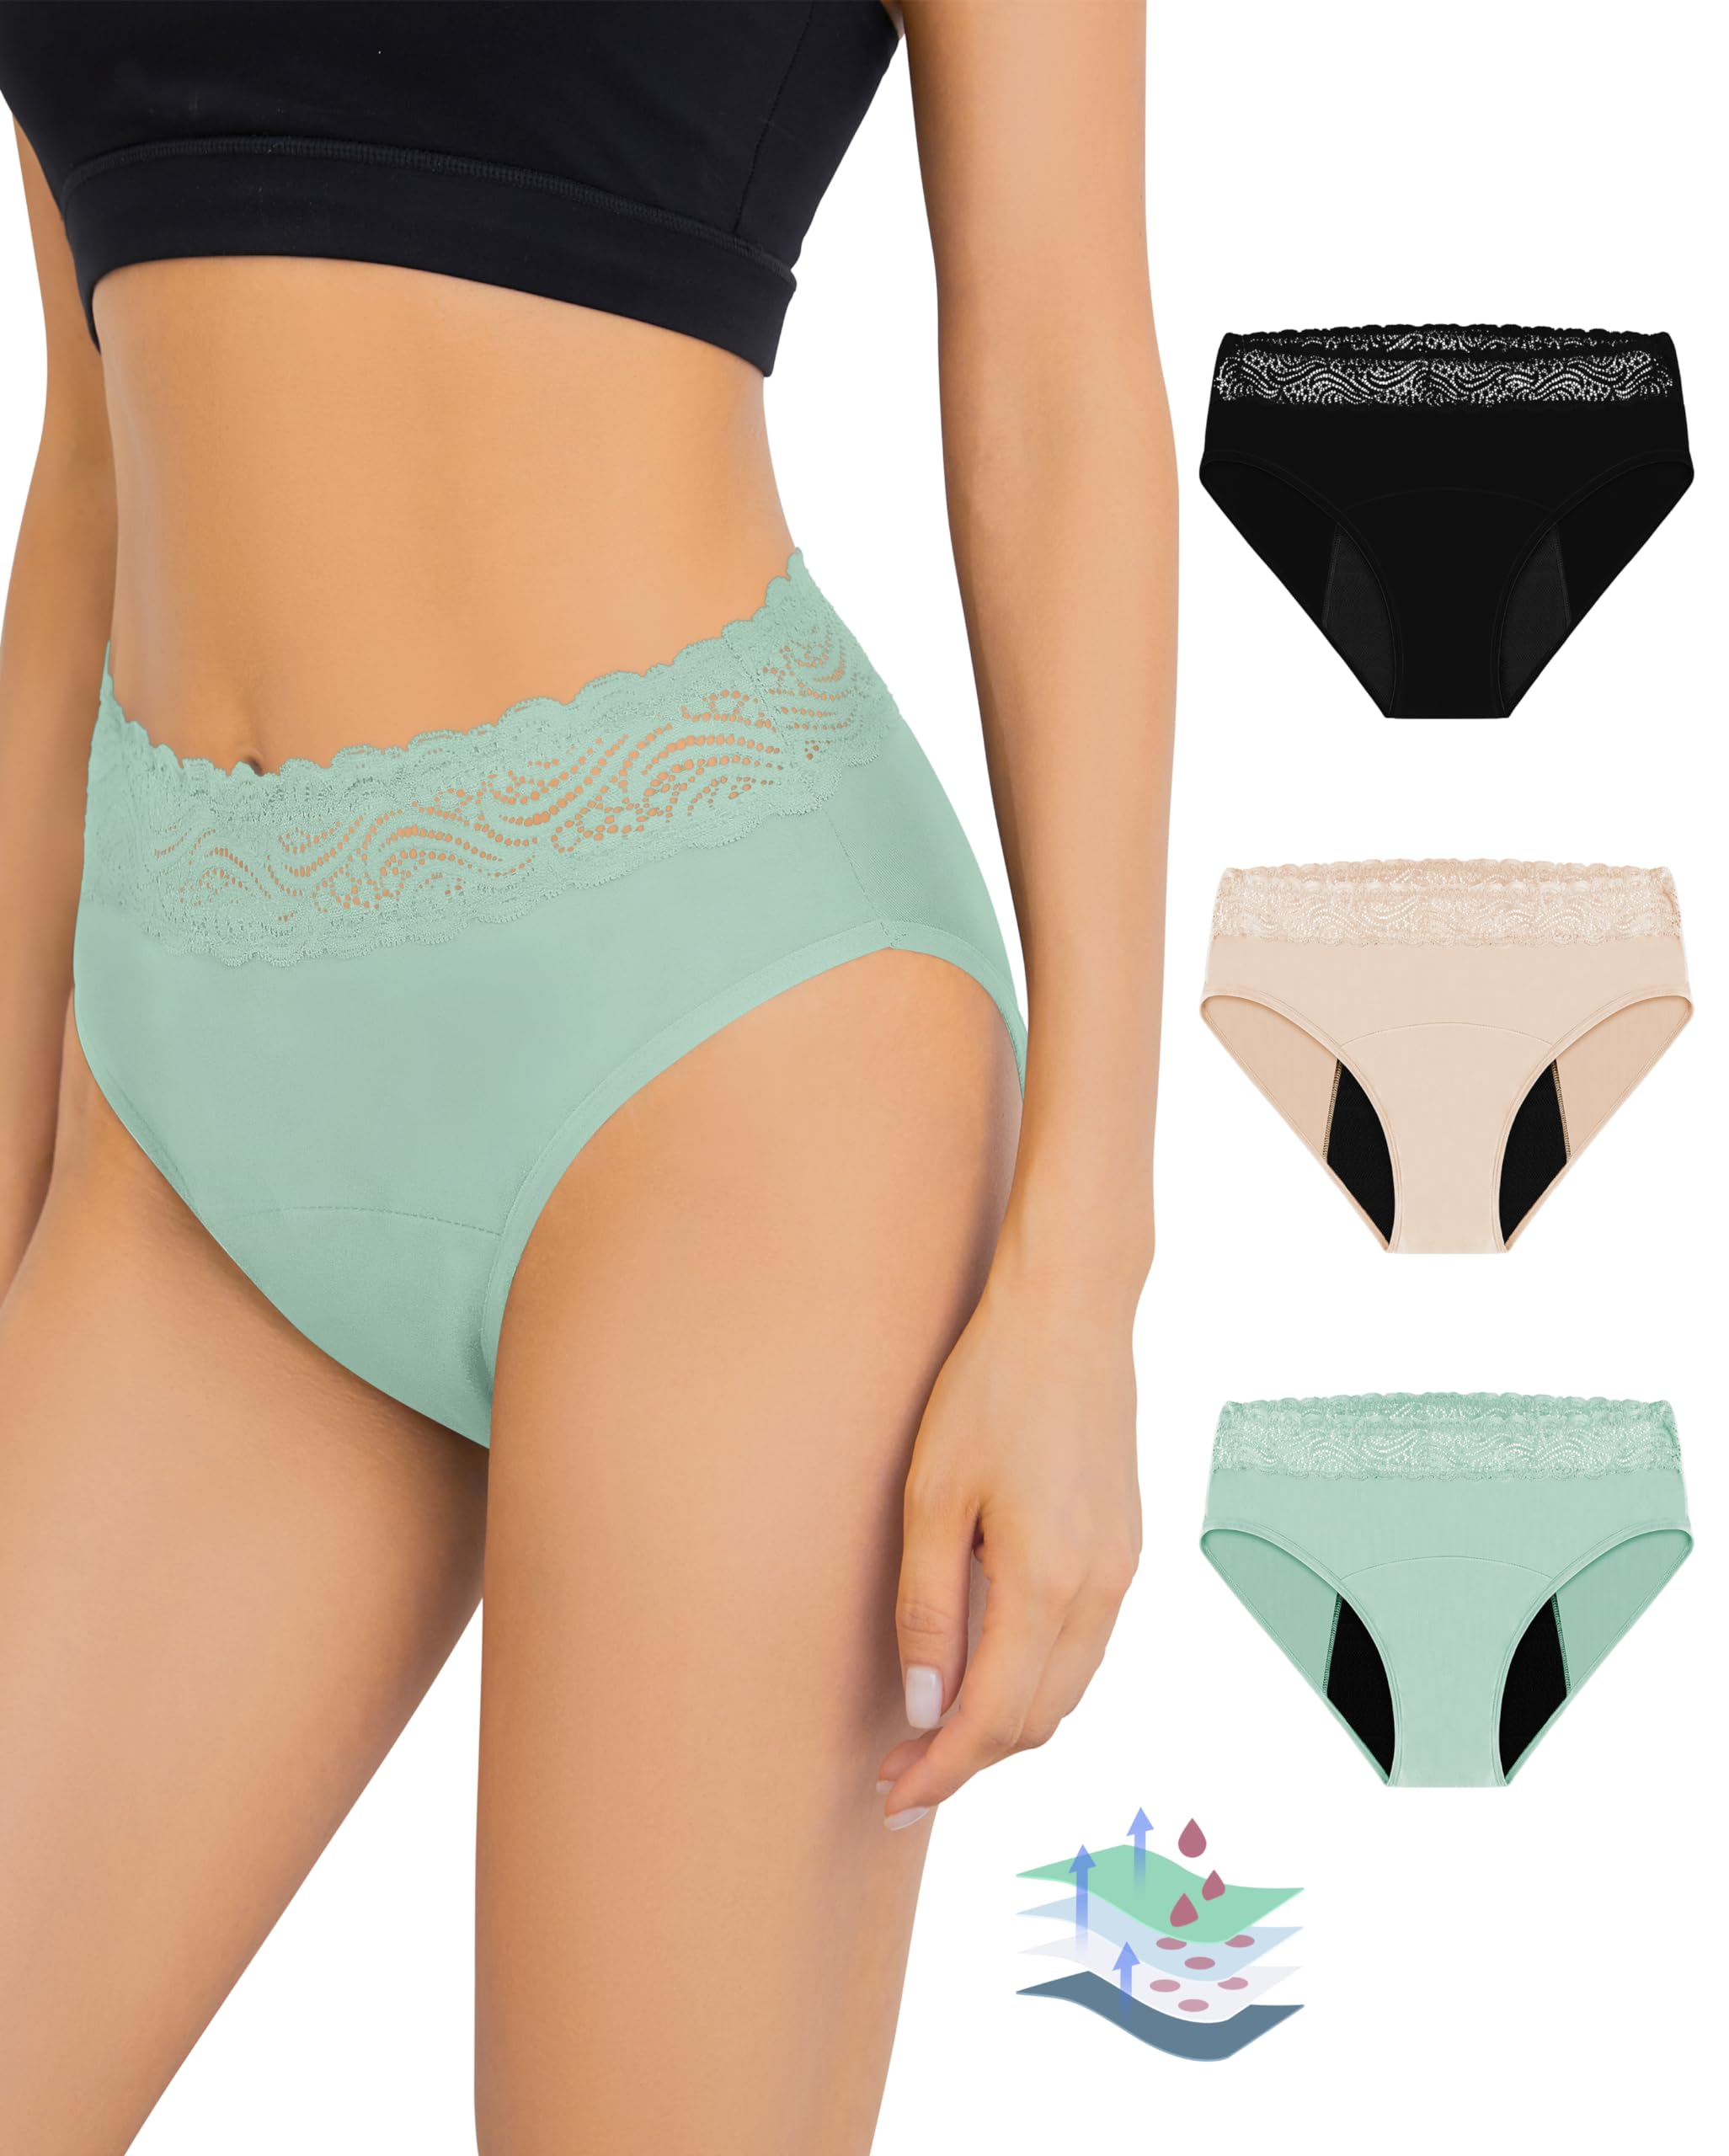 Leovqn Period Pants for Women Lace Trim Menstrual Underwear Heavy Flow  Period Knickers Leakproof Postpartum Briefs L Black/Mint Green/Nude